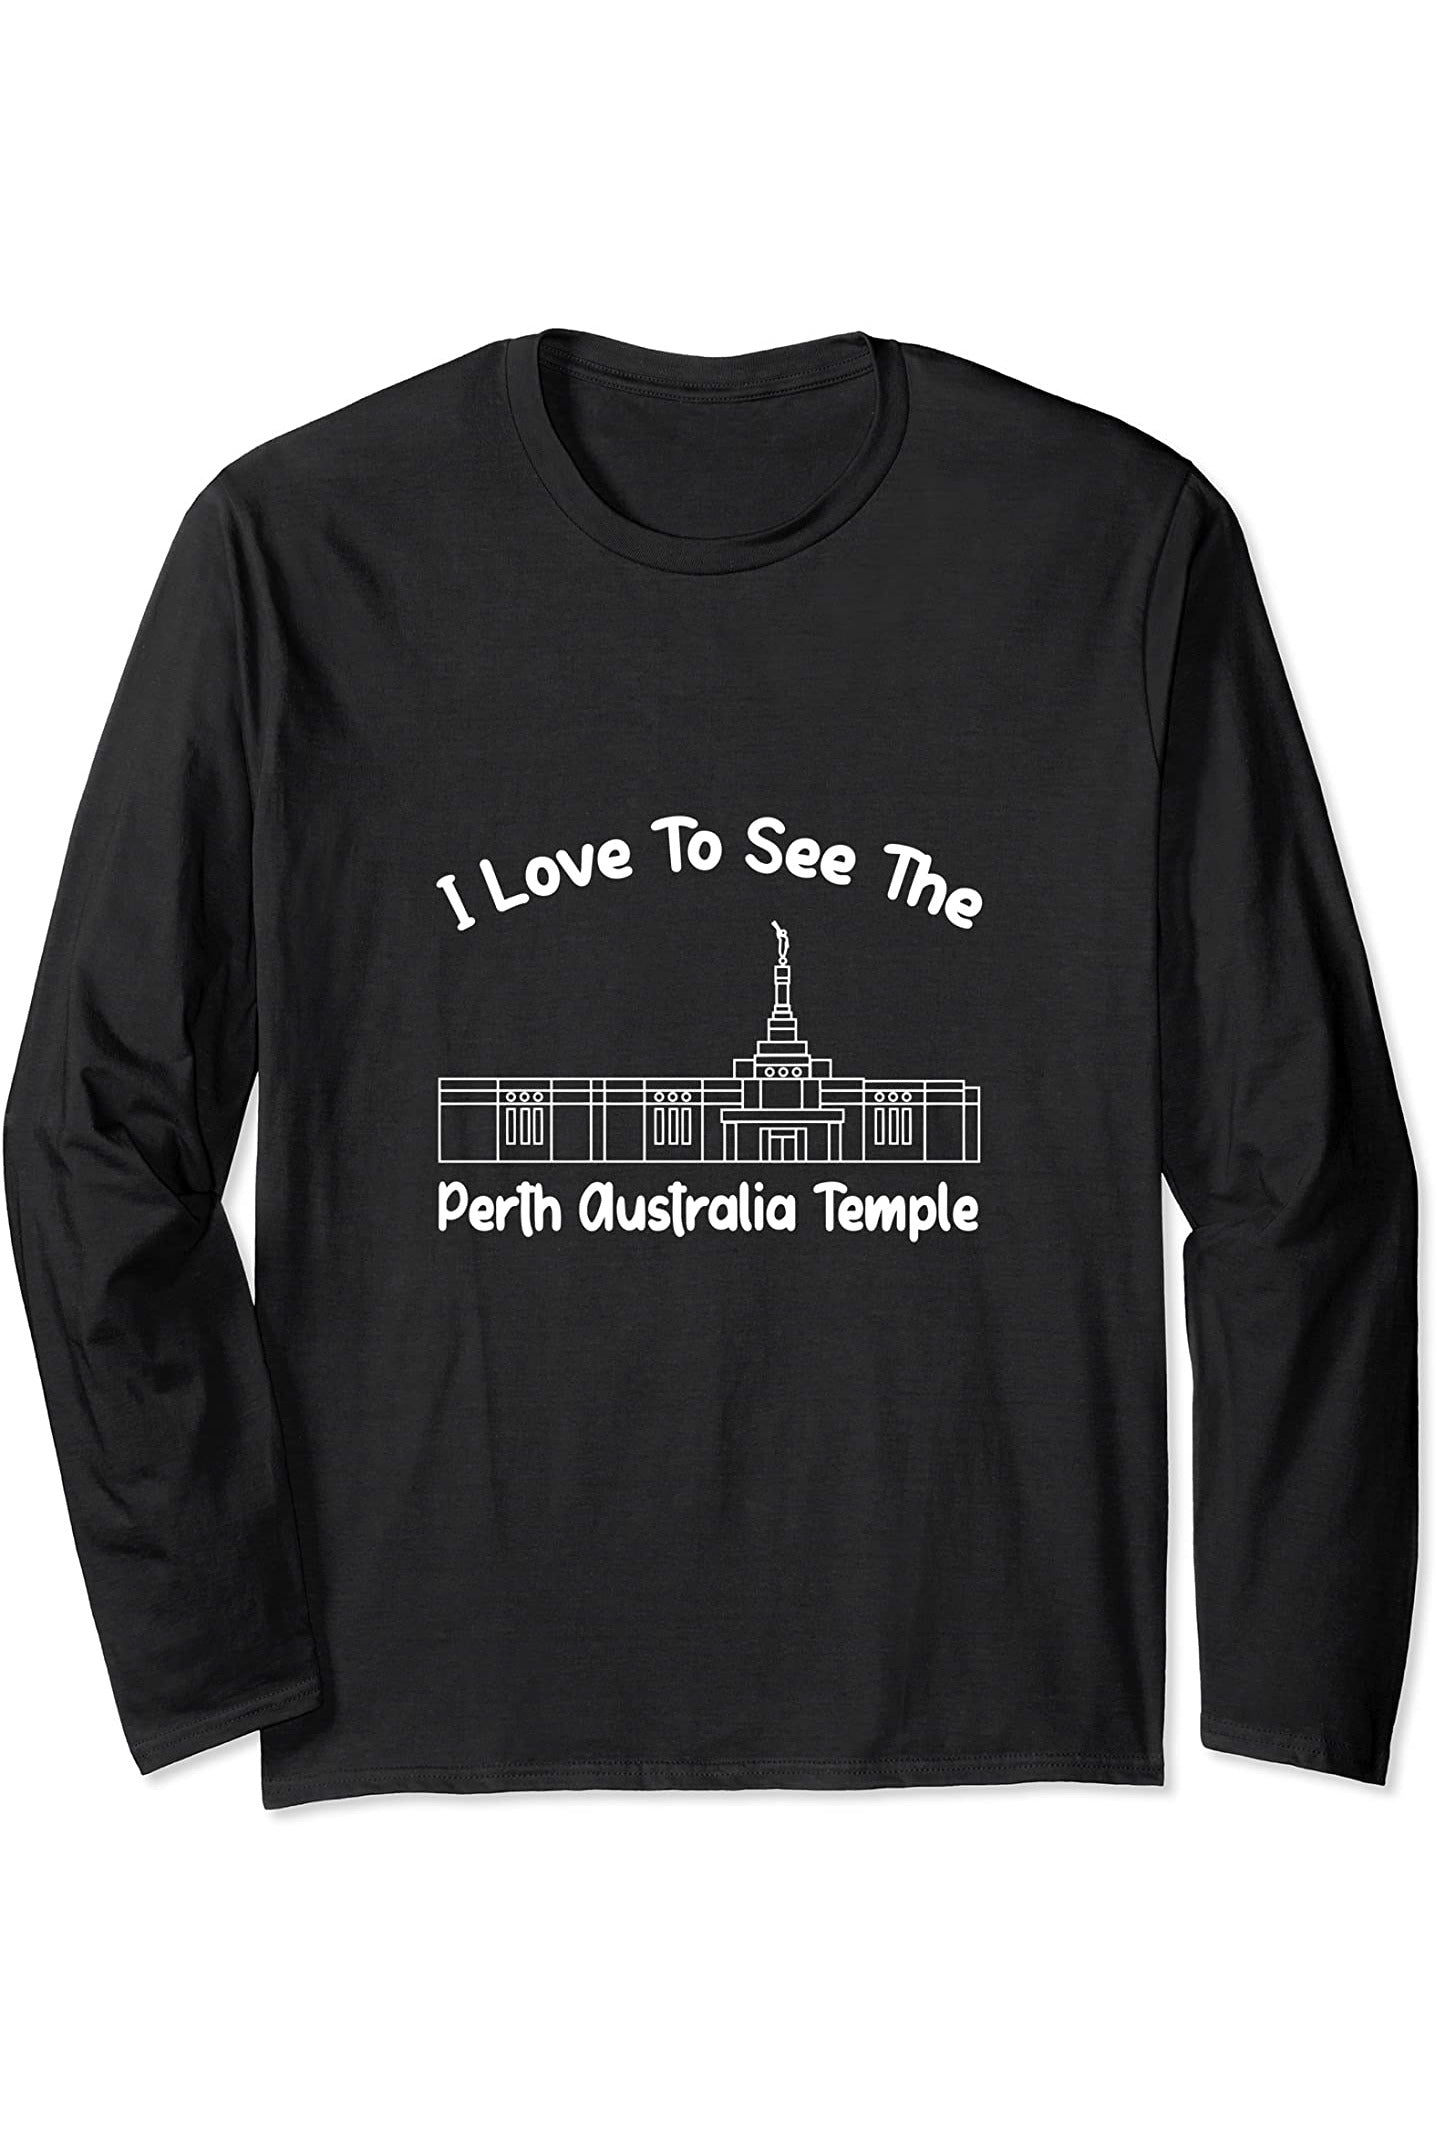 Perth Australia Temple Long Sleeve T-Shirt - Primary Style (English) US